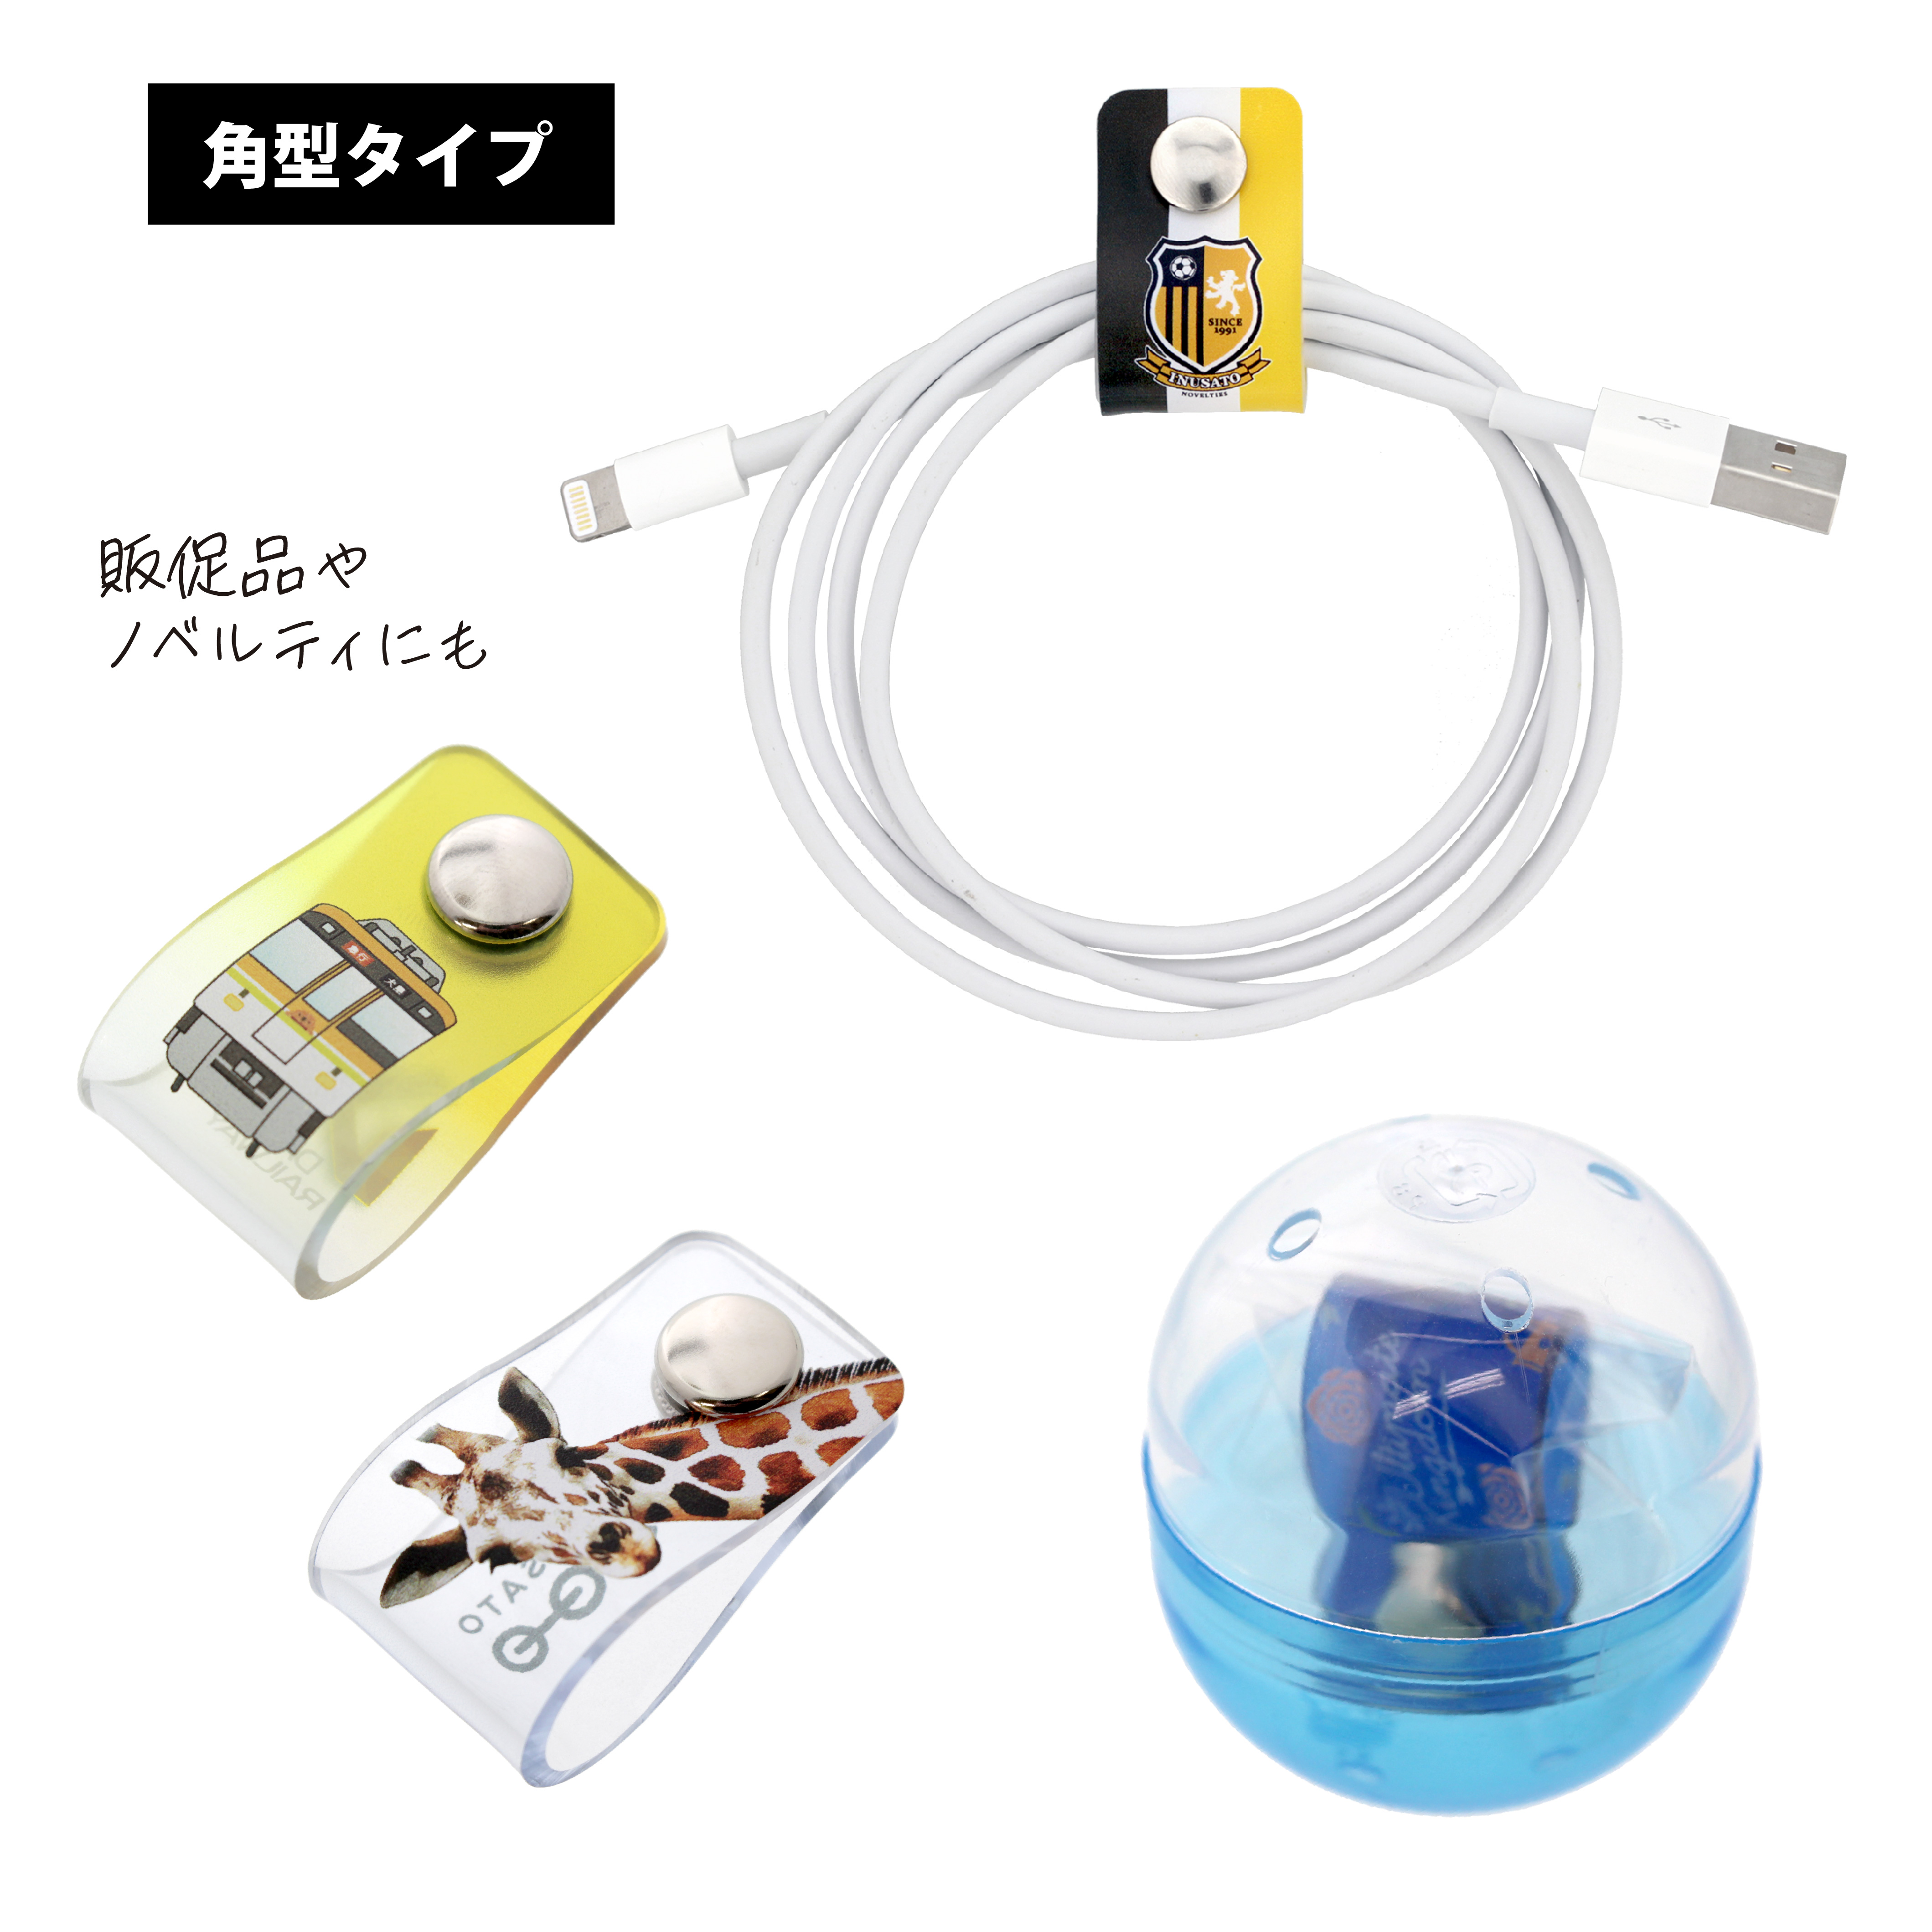 PVC cord holder ◆